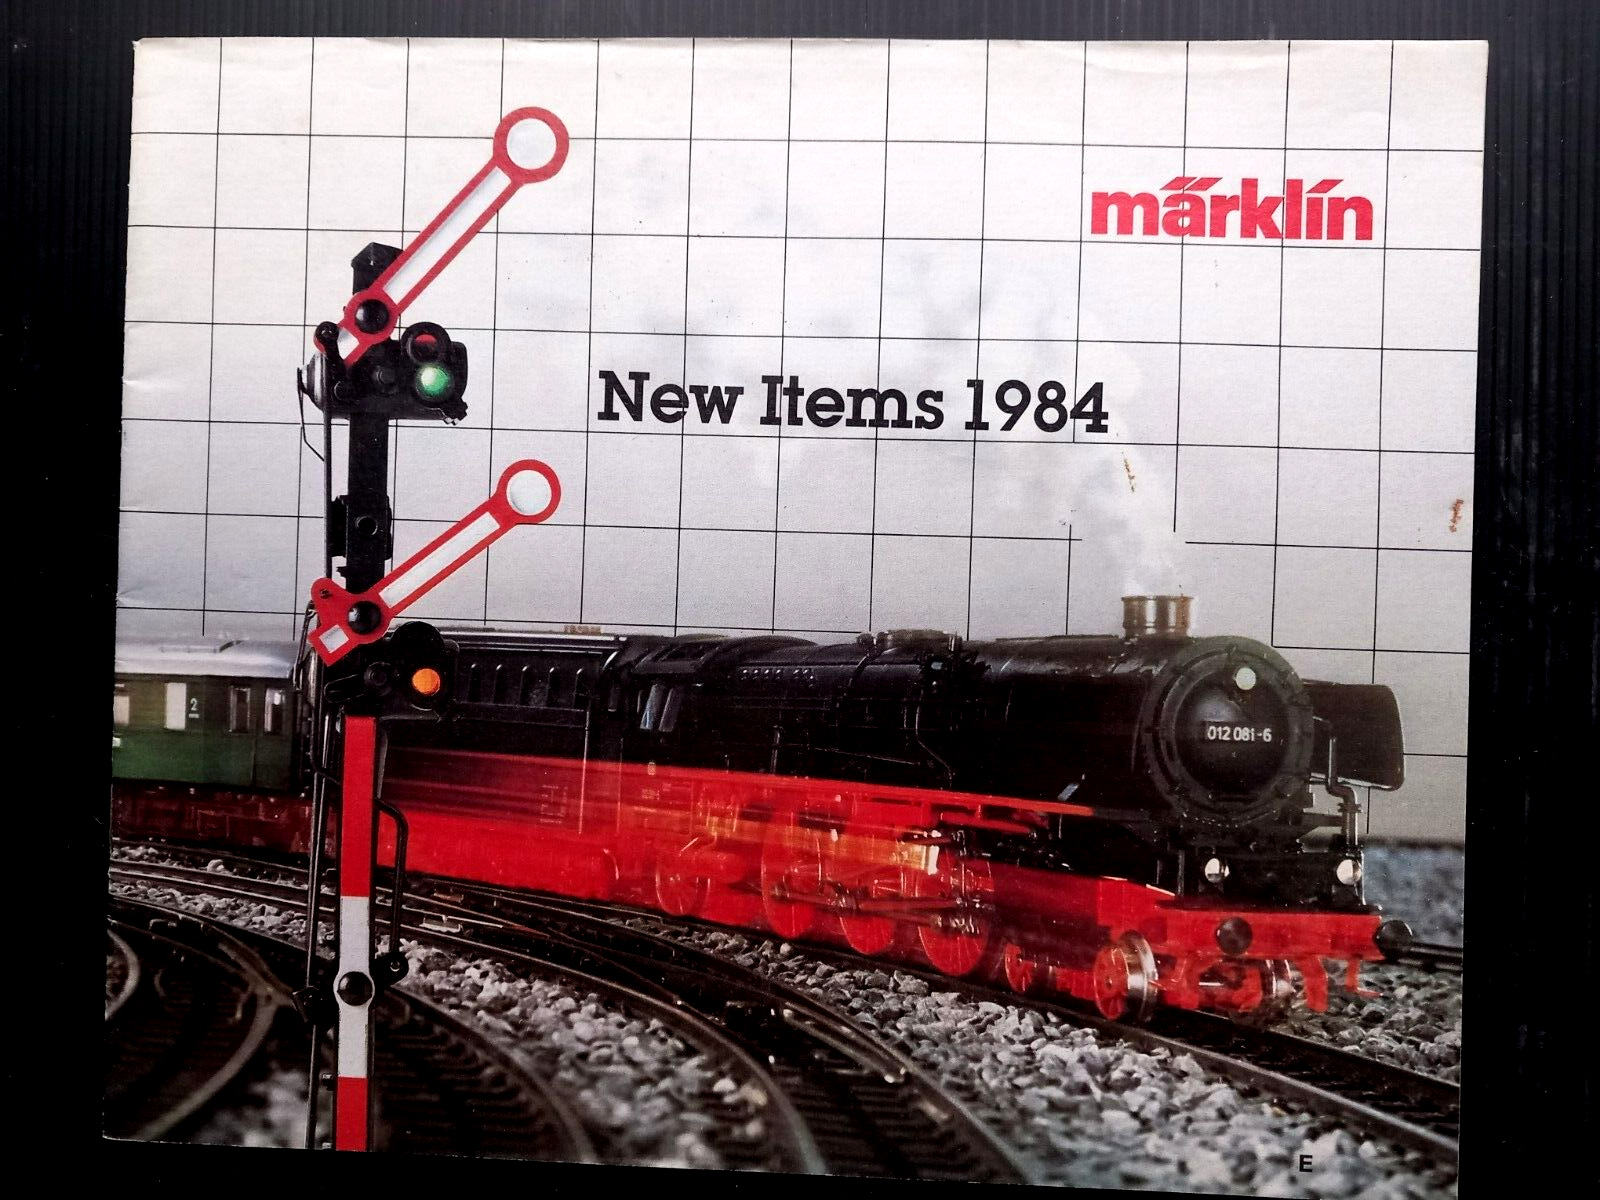 MARKLIN New Items 1984 Catalogue. PLUS Price List. English text.